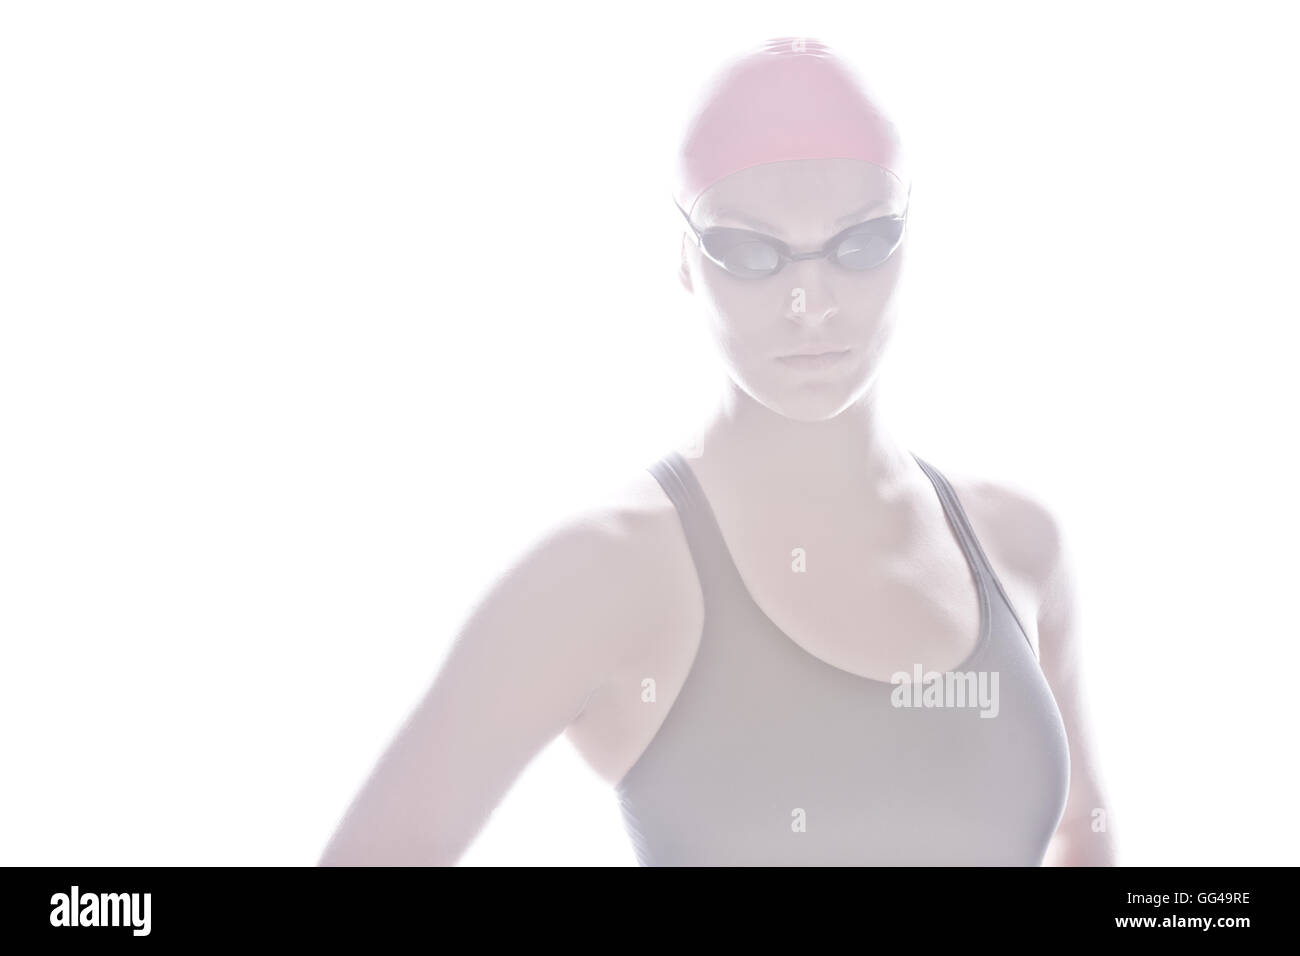 Artsy high key portrait of a female swimmer standing Stock Photo